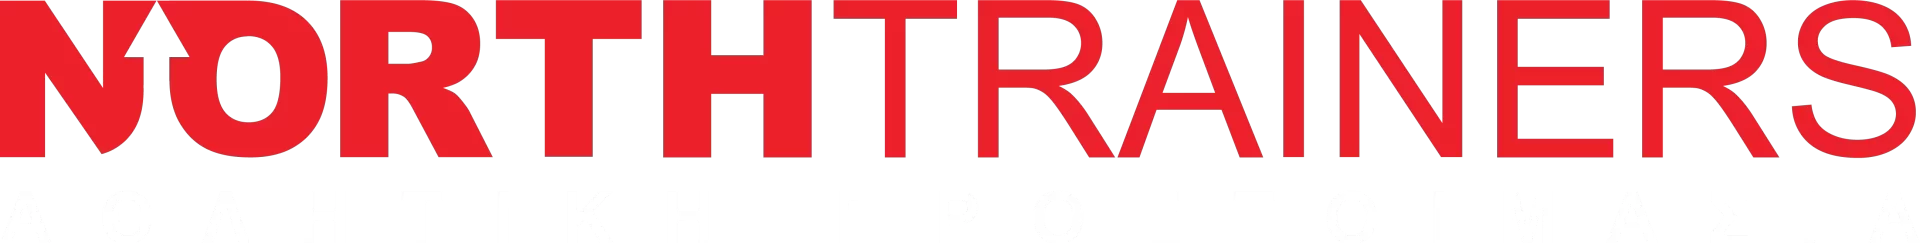 north-trainers-logo-02-1920×244